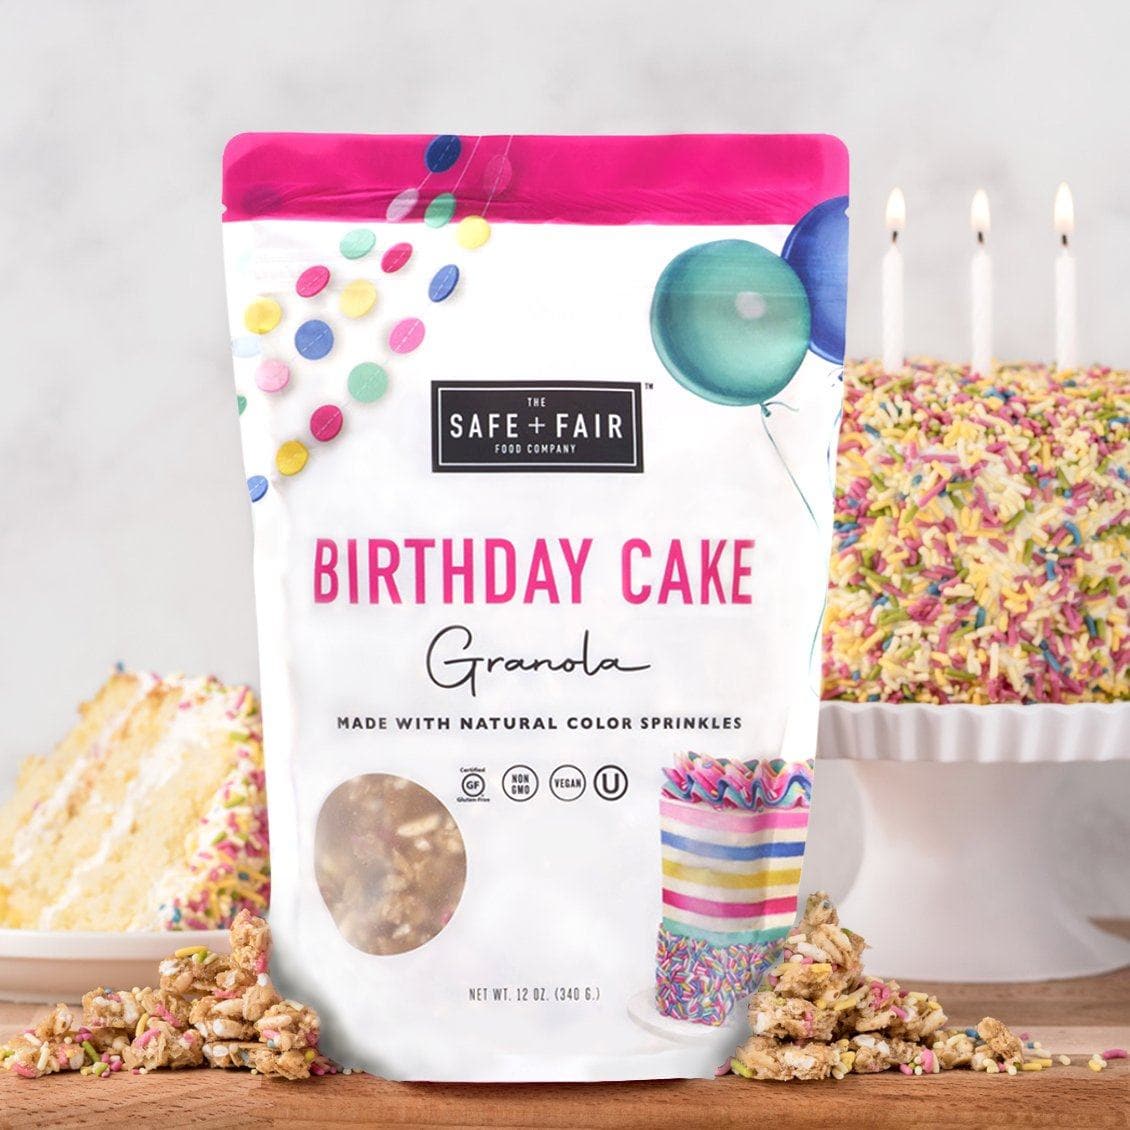 birthday cake granola bag on table with cake